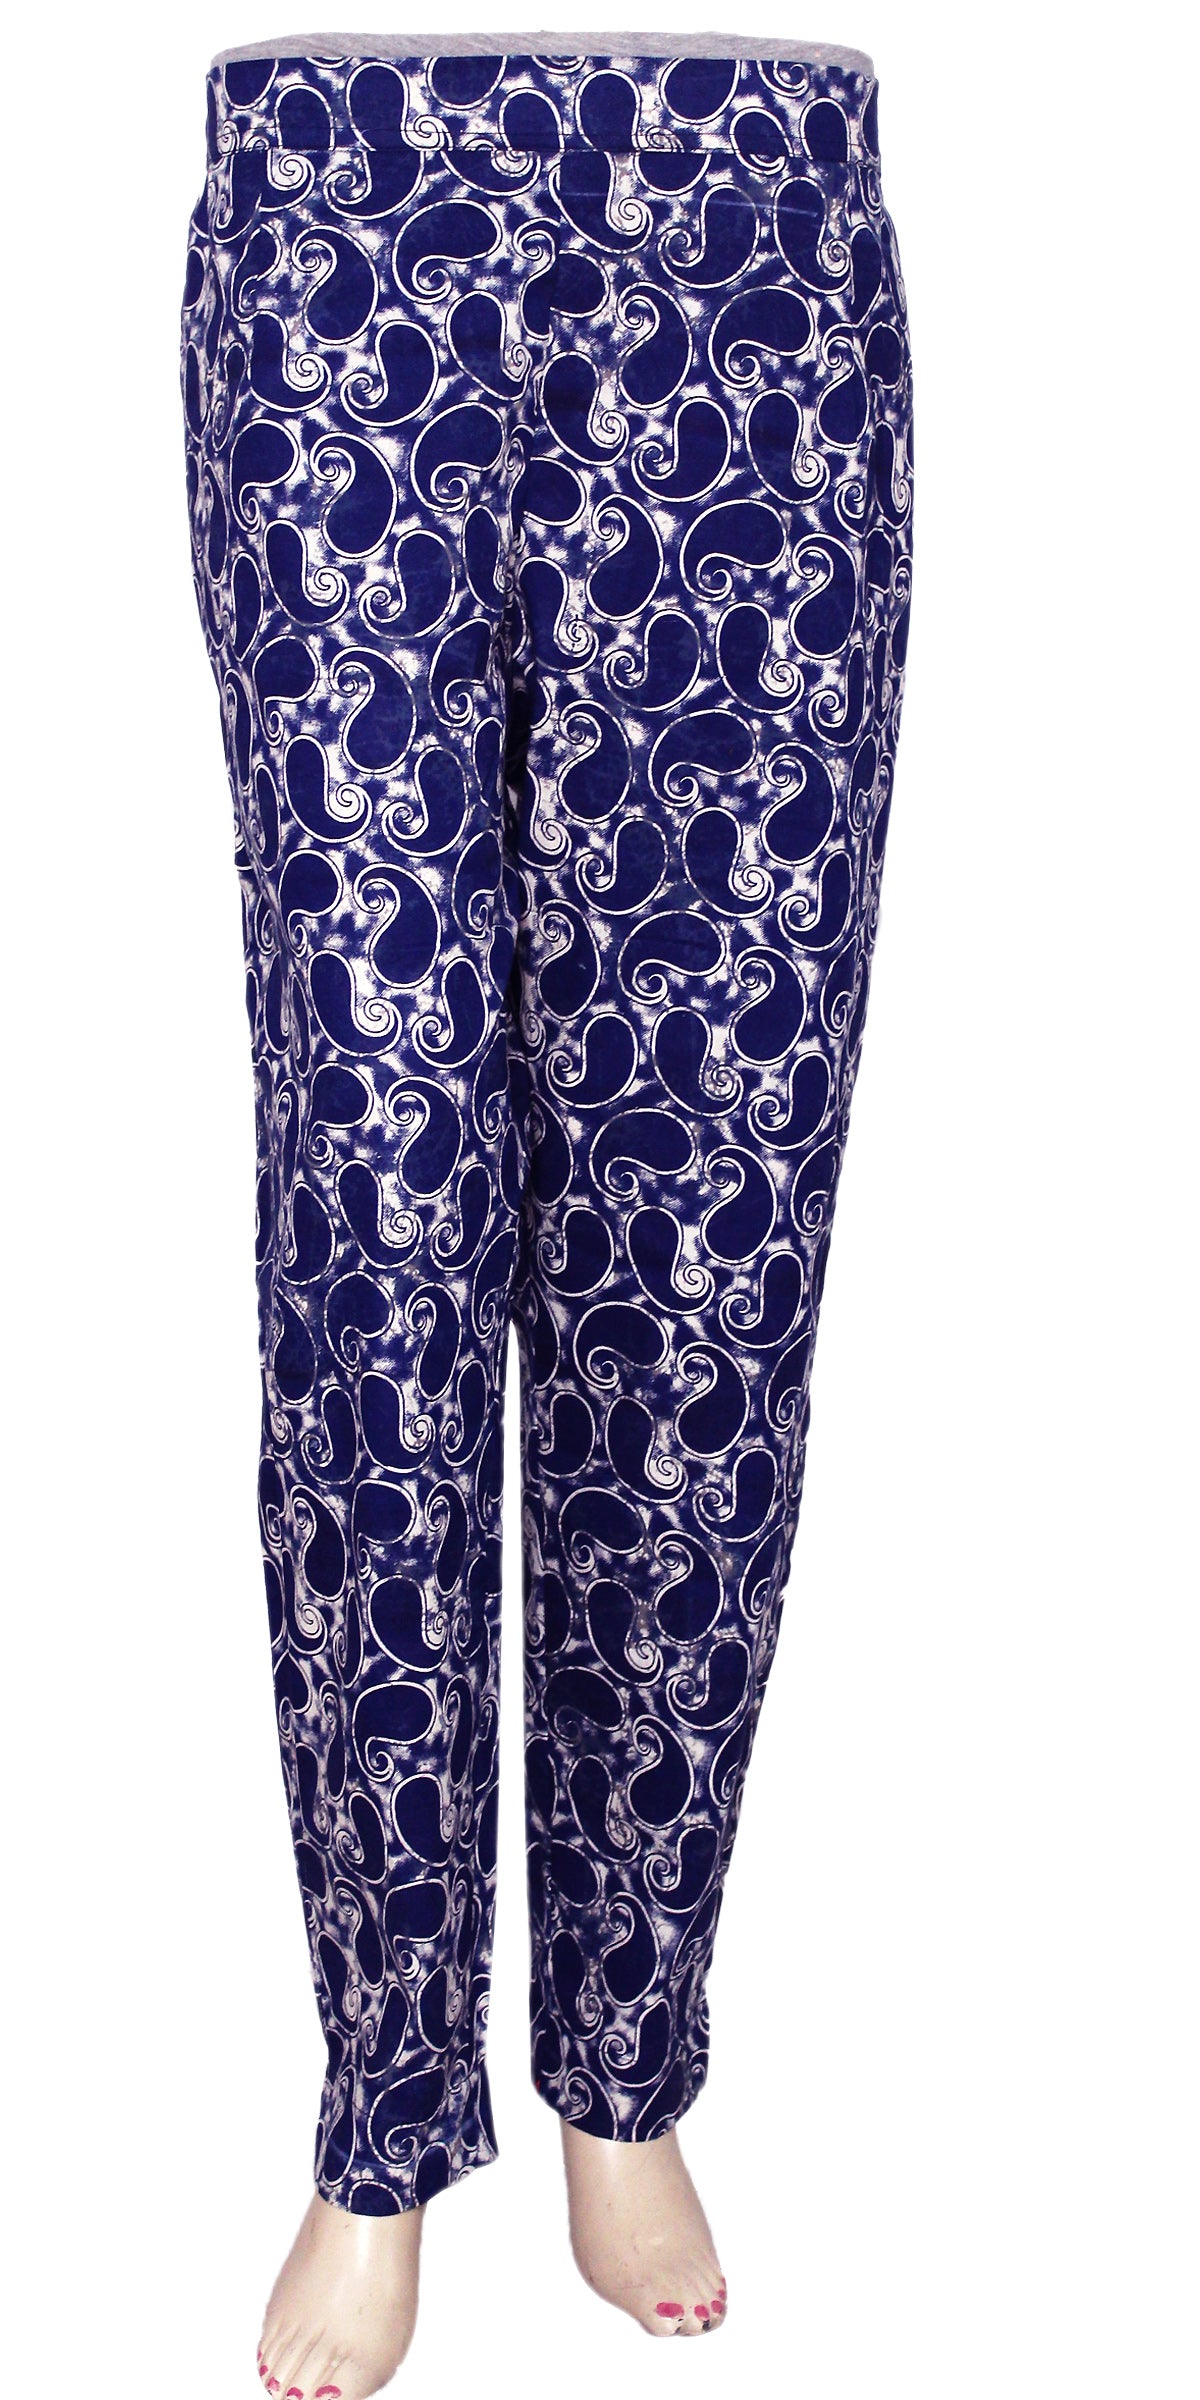 Blue & white Paisley Batik Print Cotton Women's Fitted Skinny Pants Trousers